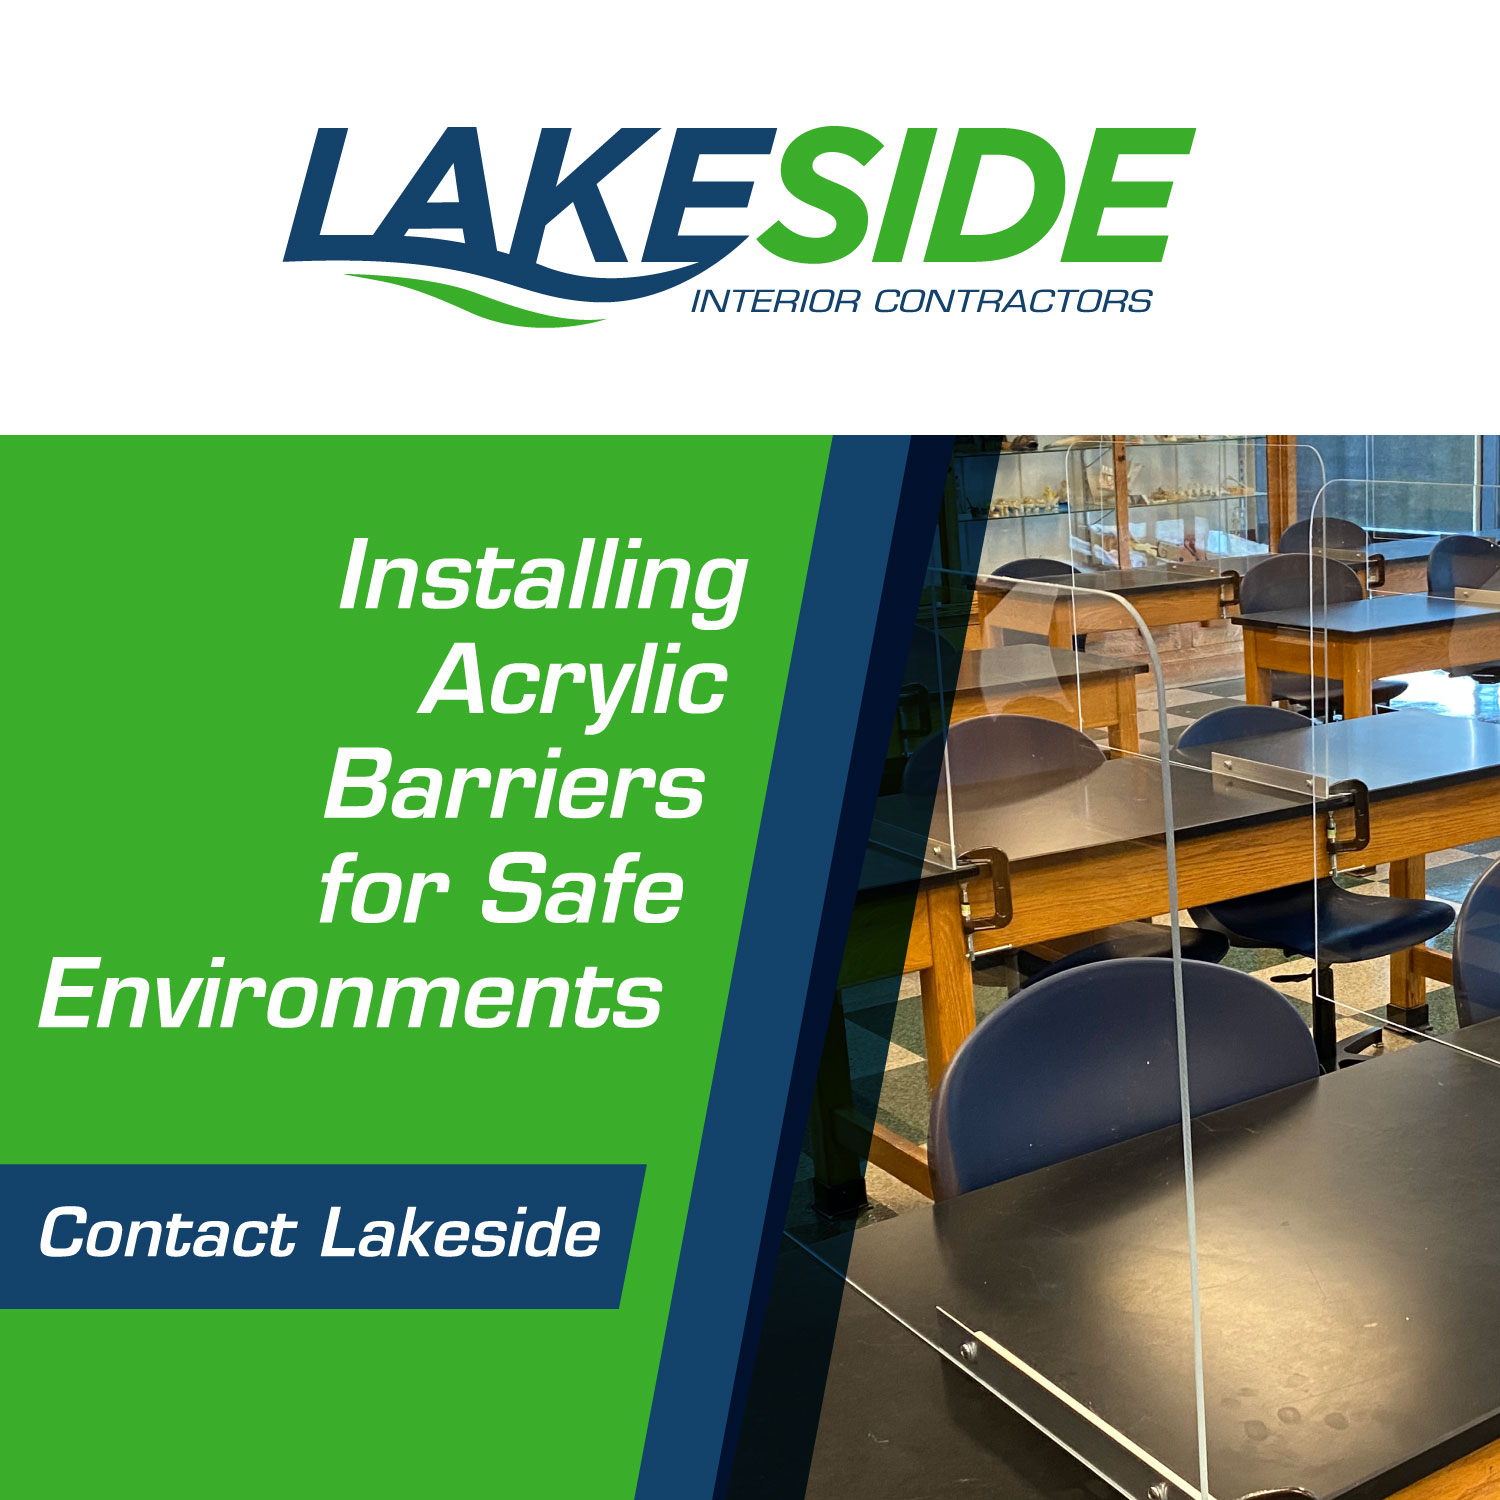 LakesideAcrylic - Lakeside Interior Contractors